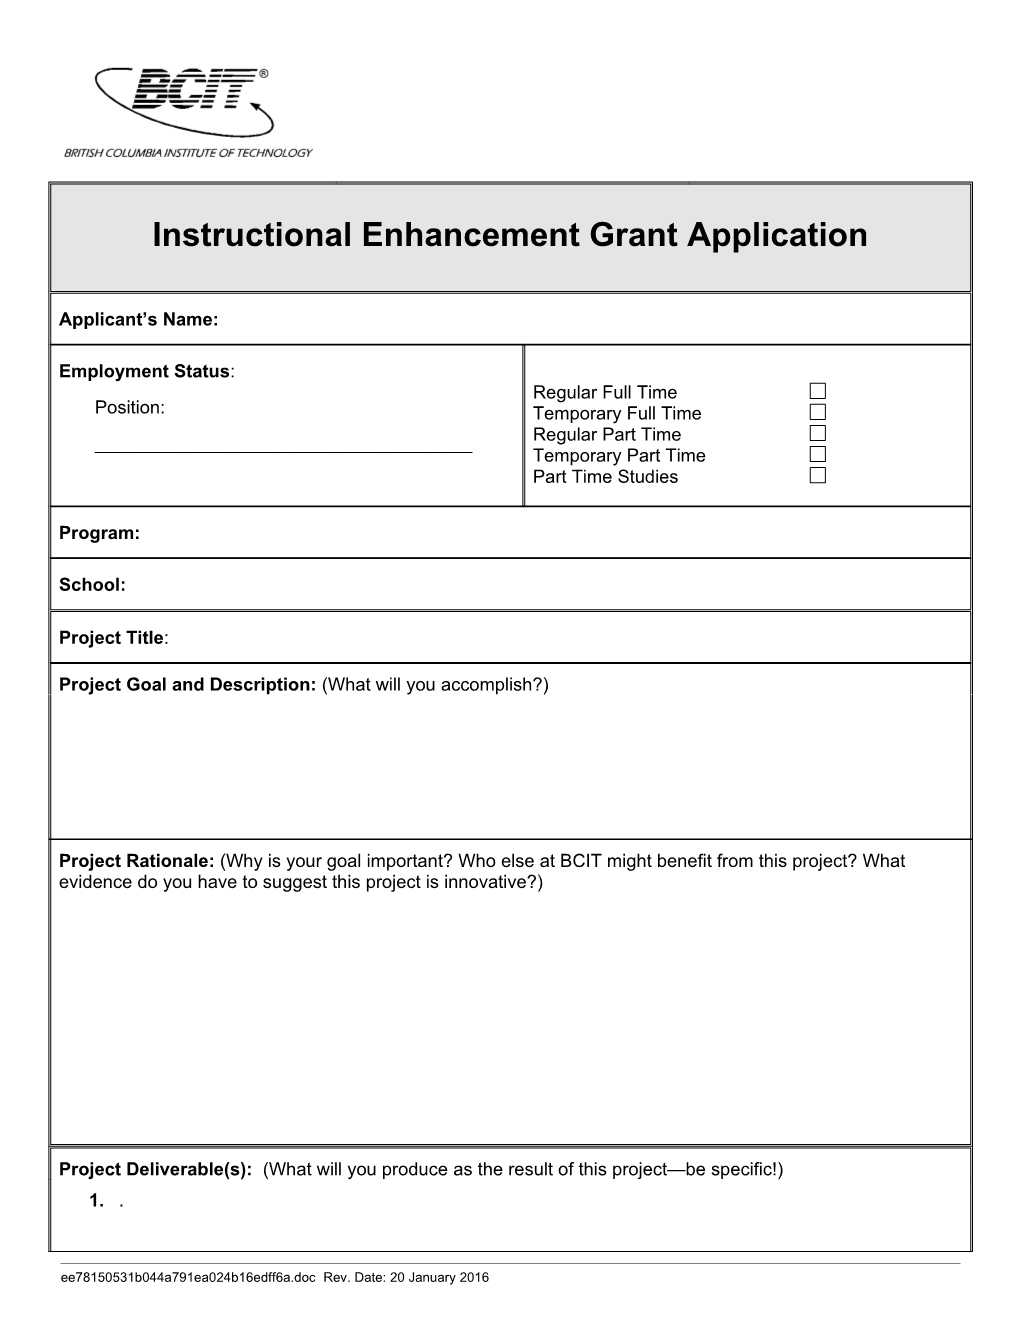 Grant Application 2016 Rev. Date: 20 January 2016